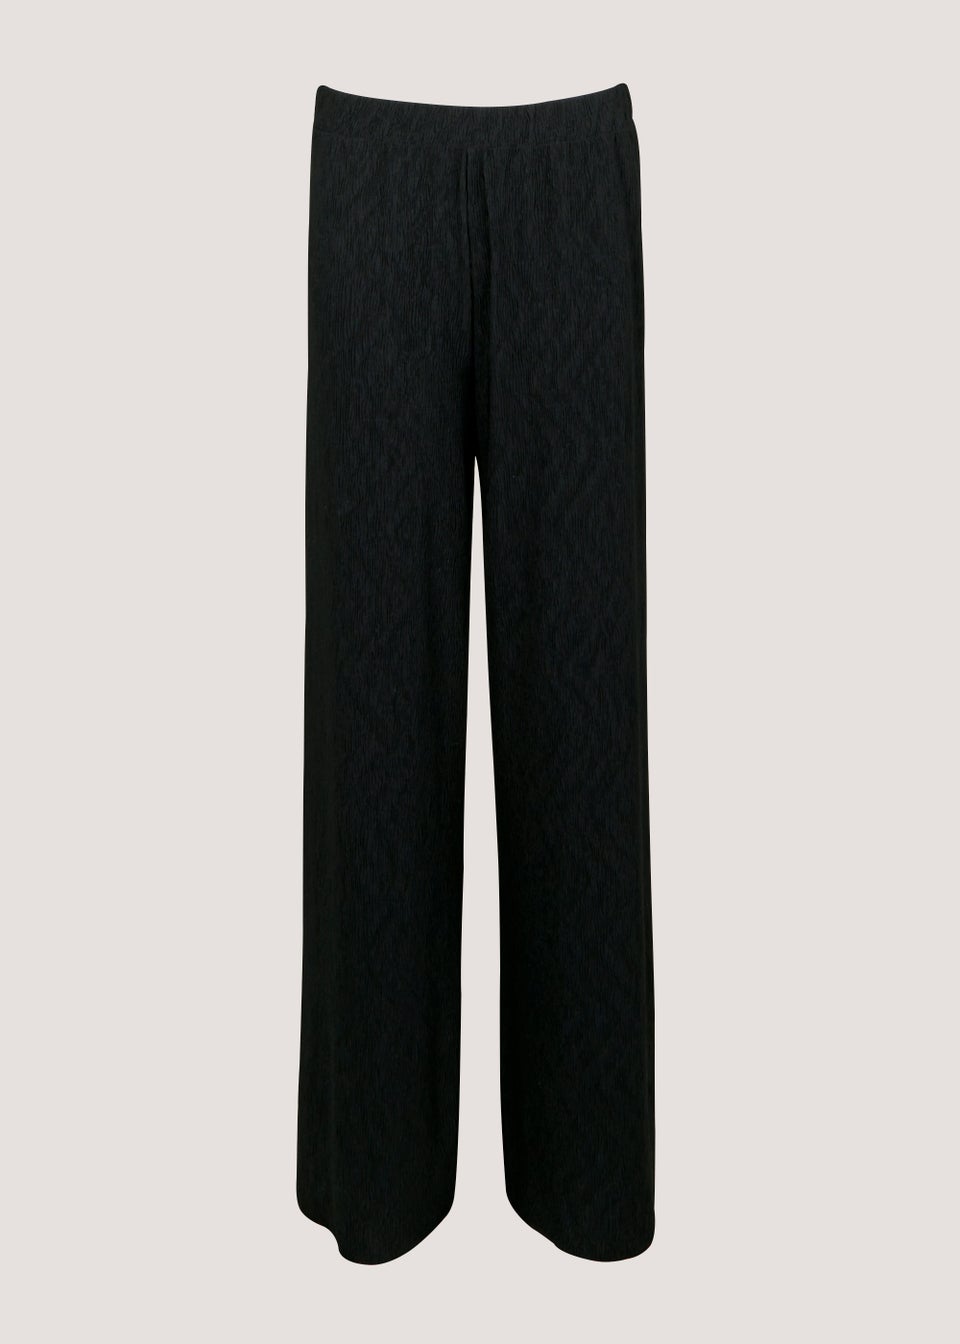 Black Plisse Trousers (Long Length)